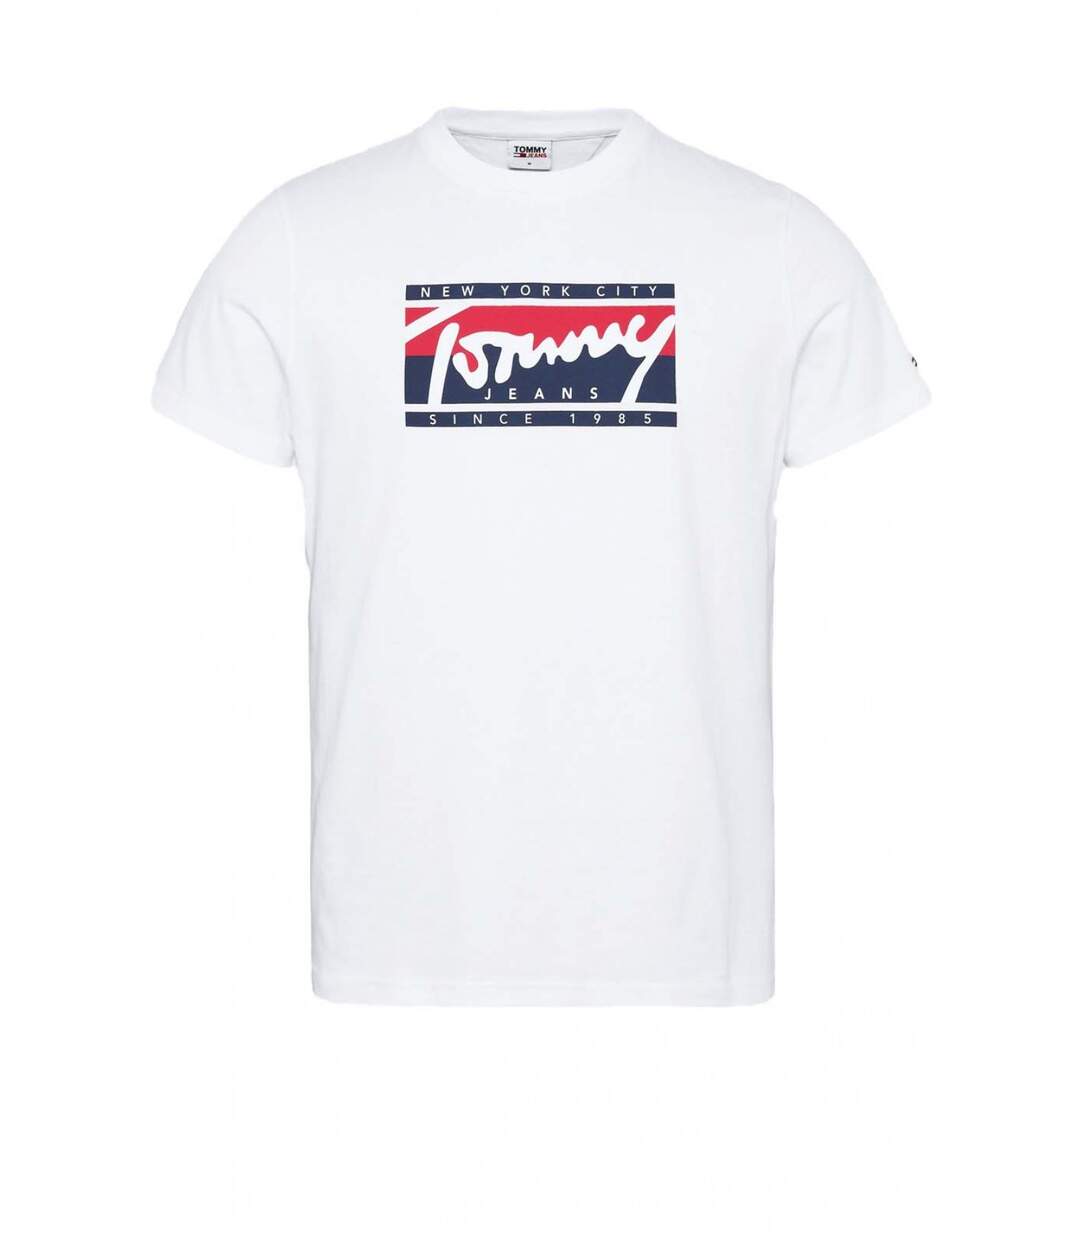 Tee shirt gros logo en coton bio  -  Tommy Jeans - Homme